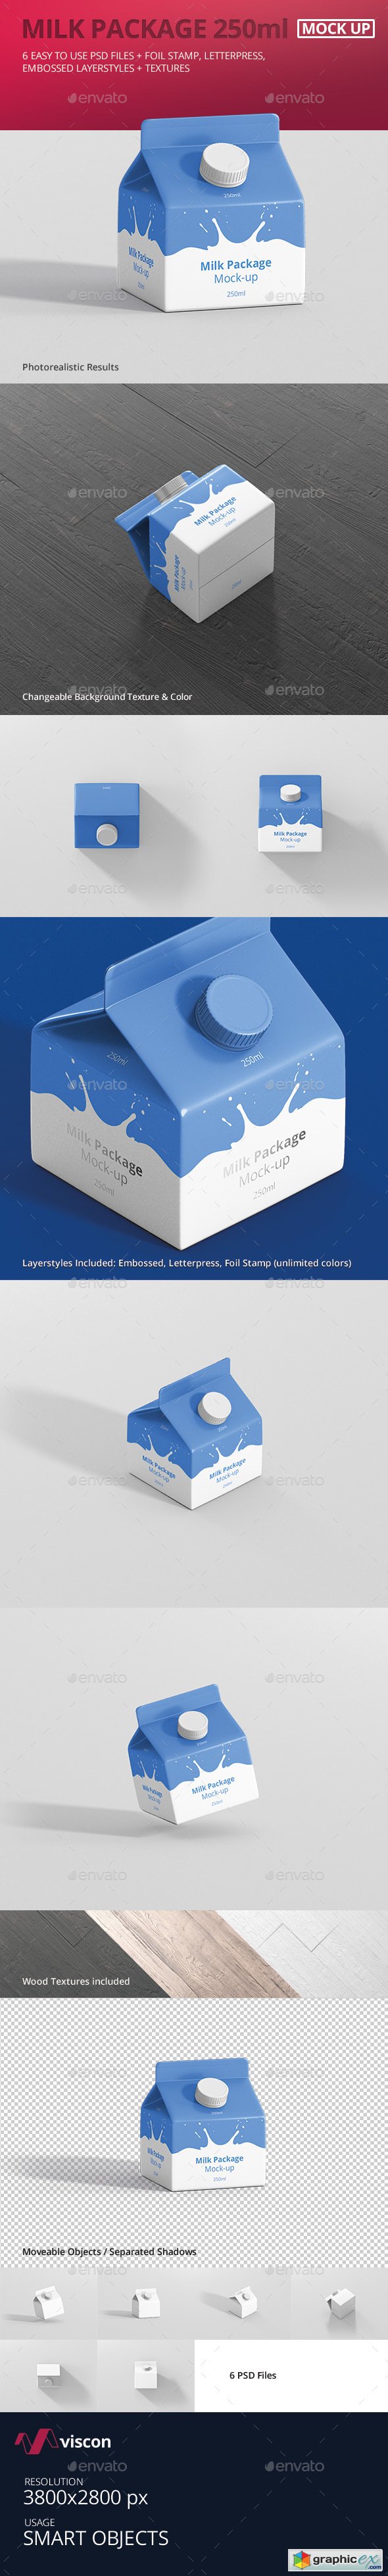 Juice / Milk Mockup - 250ml Carton Box